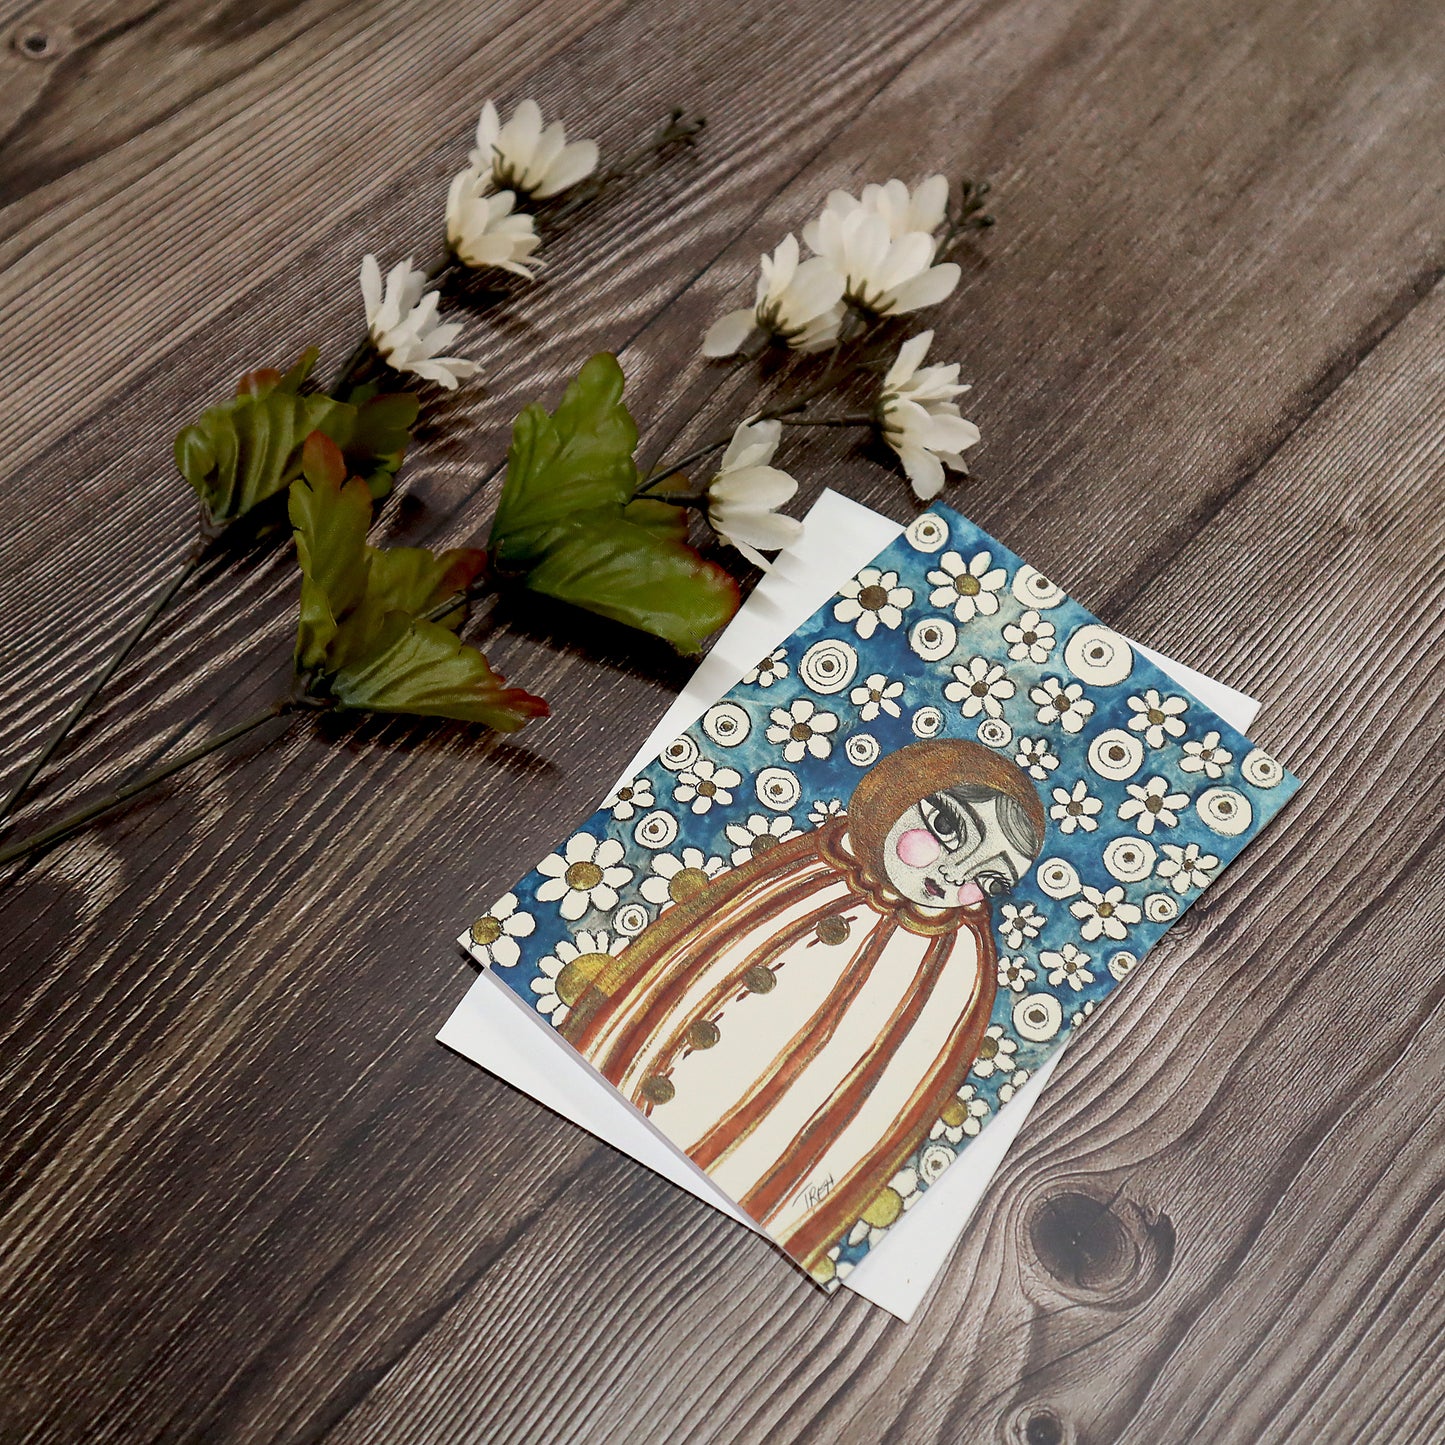 Greeting Card, Blank Inside, 4x6 - "Daisy Star Moon Being"